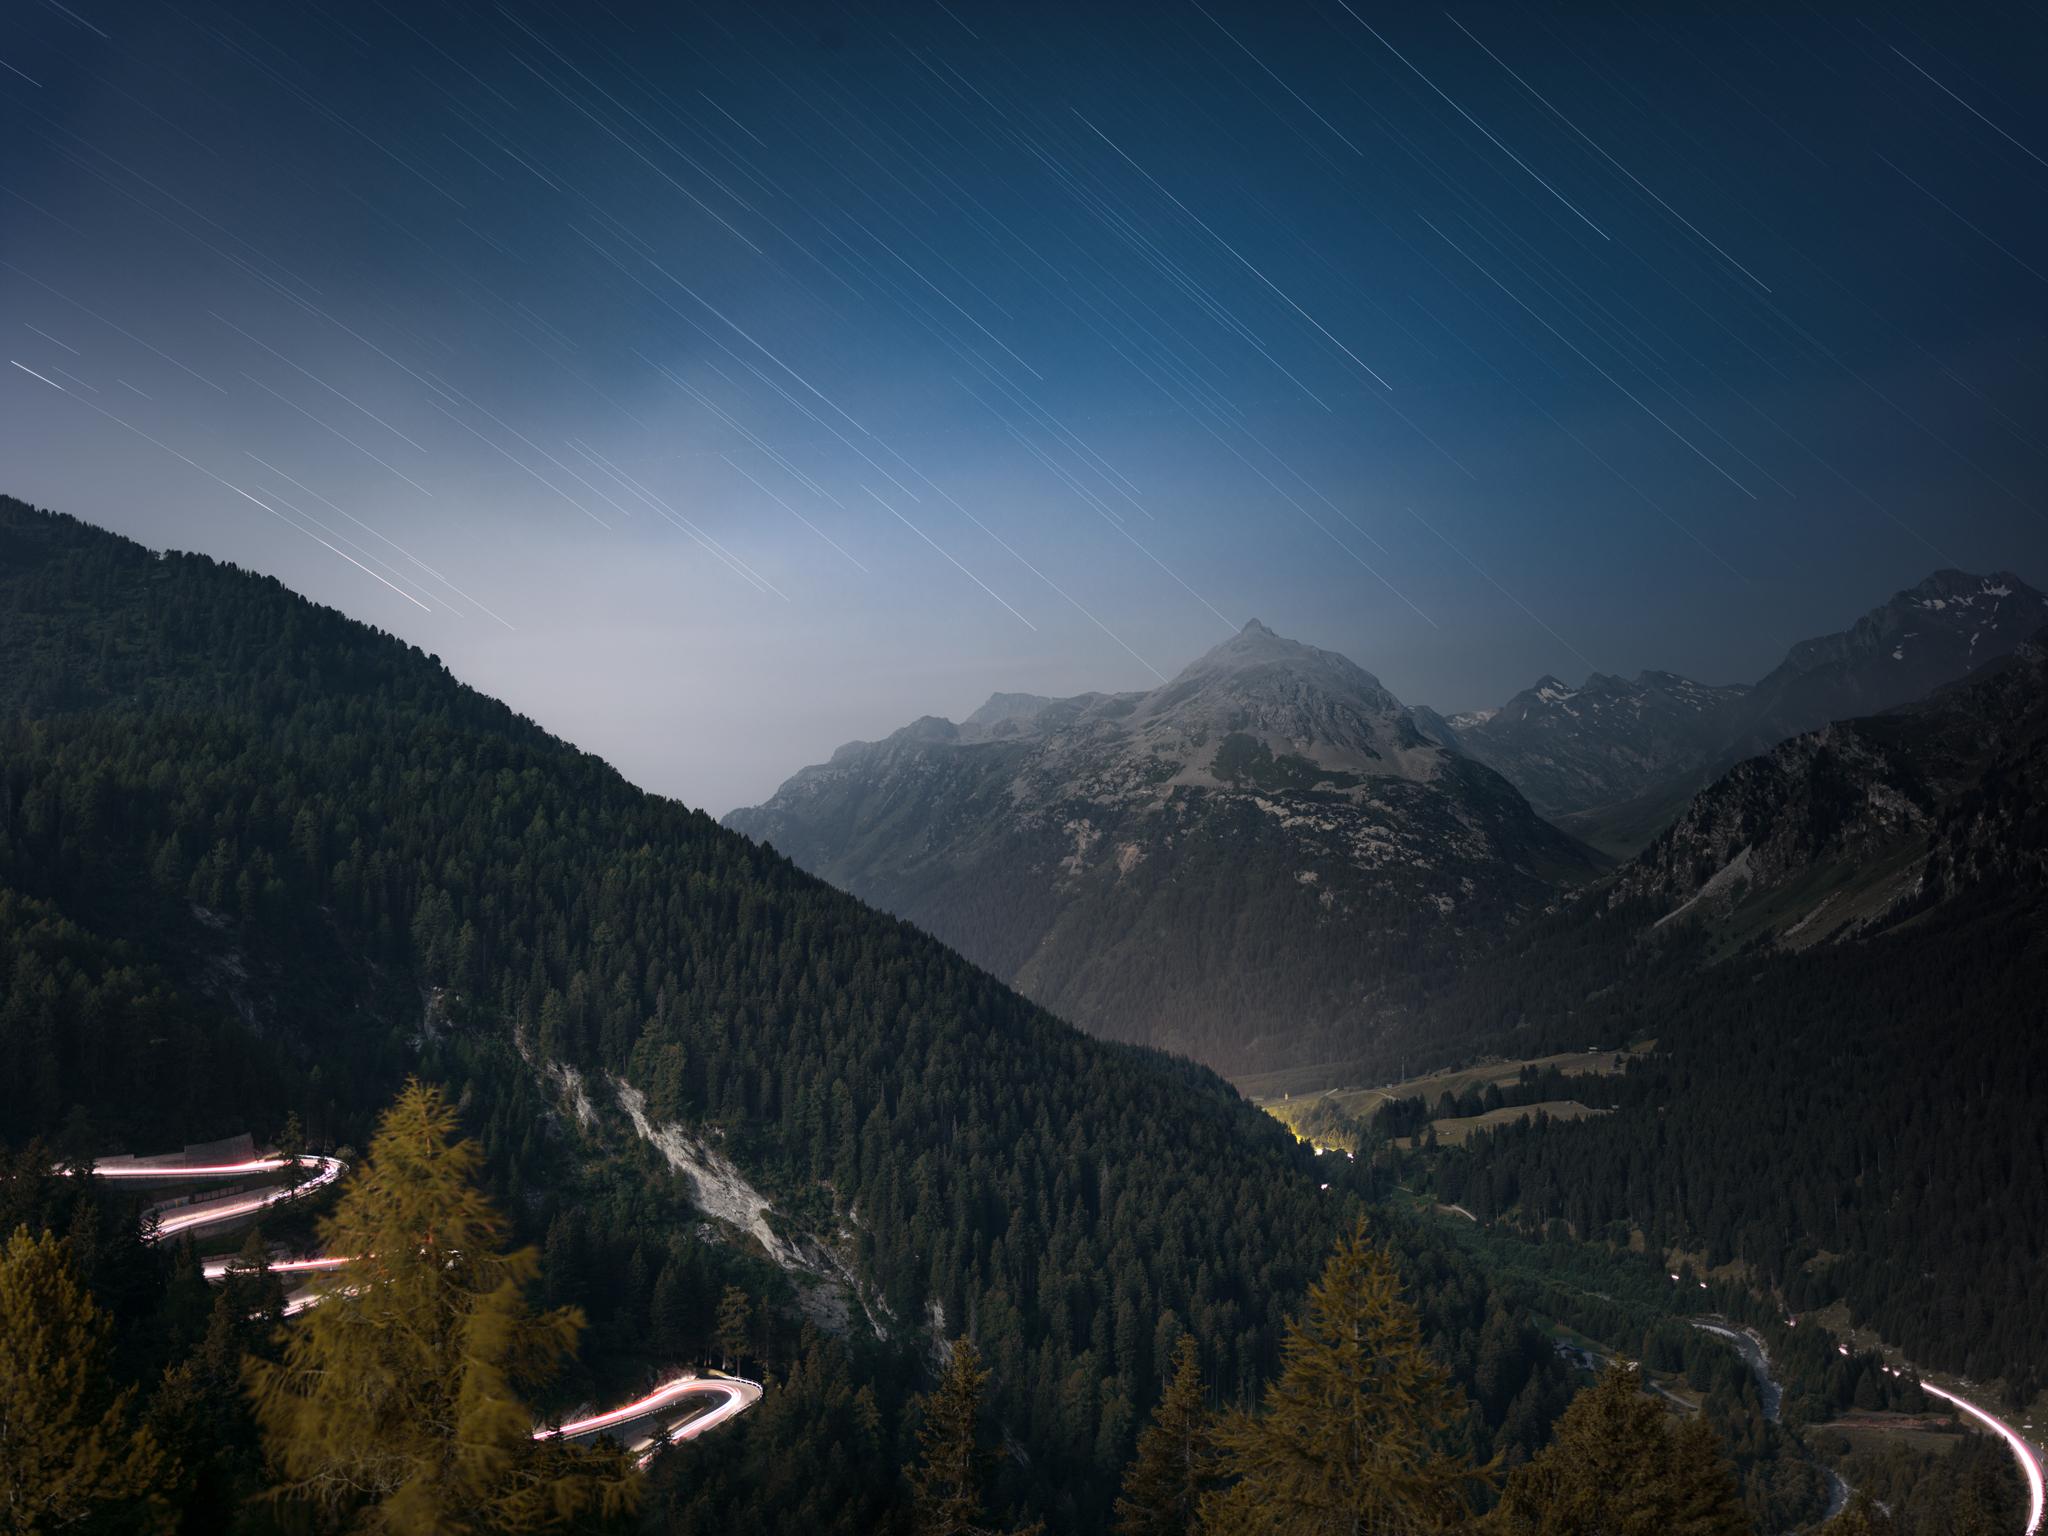 Maloja Pass Switzerland Night Photography: Small Image, Black Frame with Glass